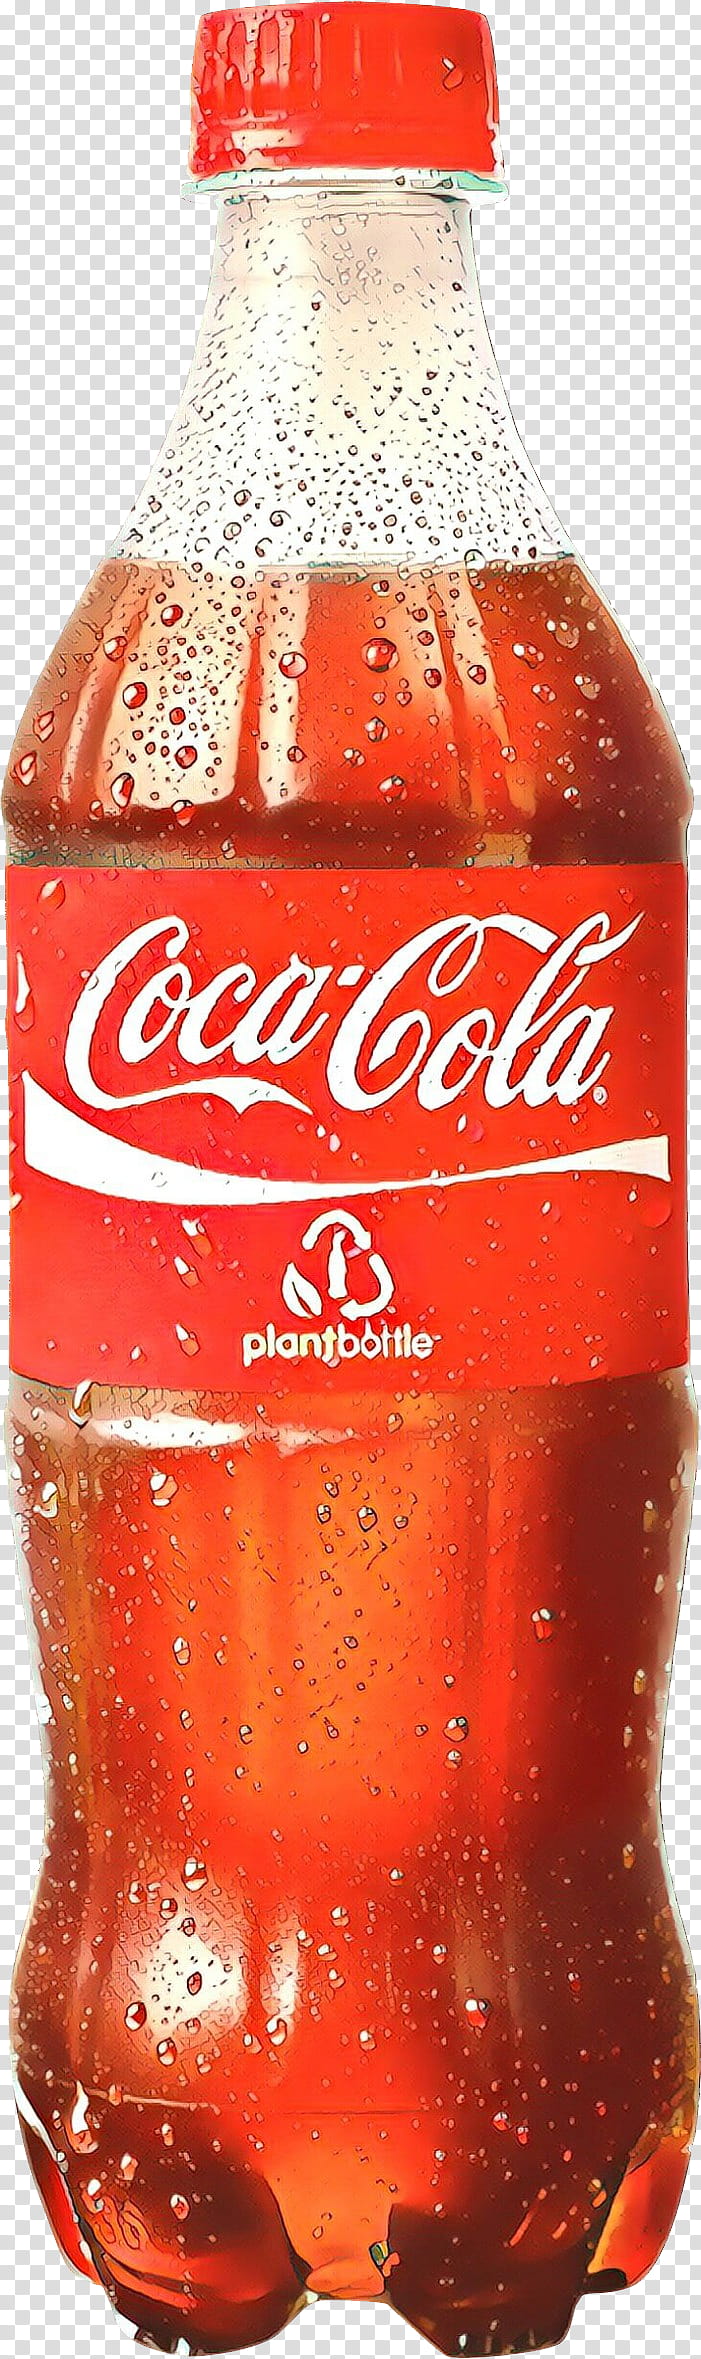 Coca-cola, Cocacola, Drink, Beverage Can, Soft Drink, Carbonated Soft Drinks, Nonalcoholic Beverage, Bottle transparent background PNG clipart